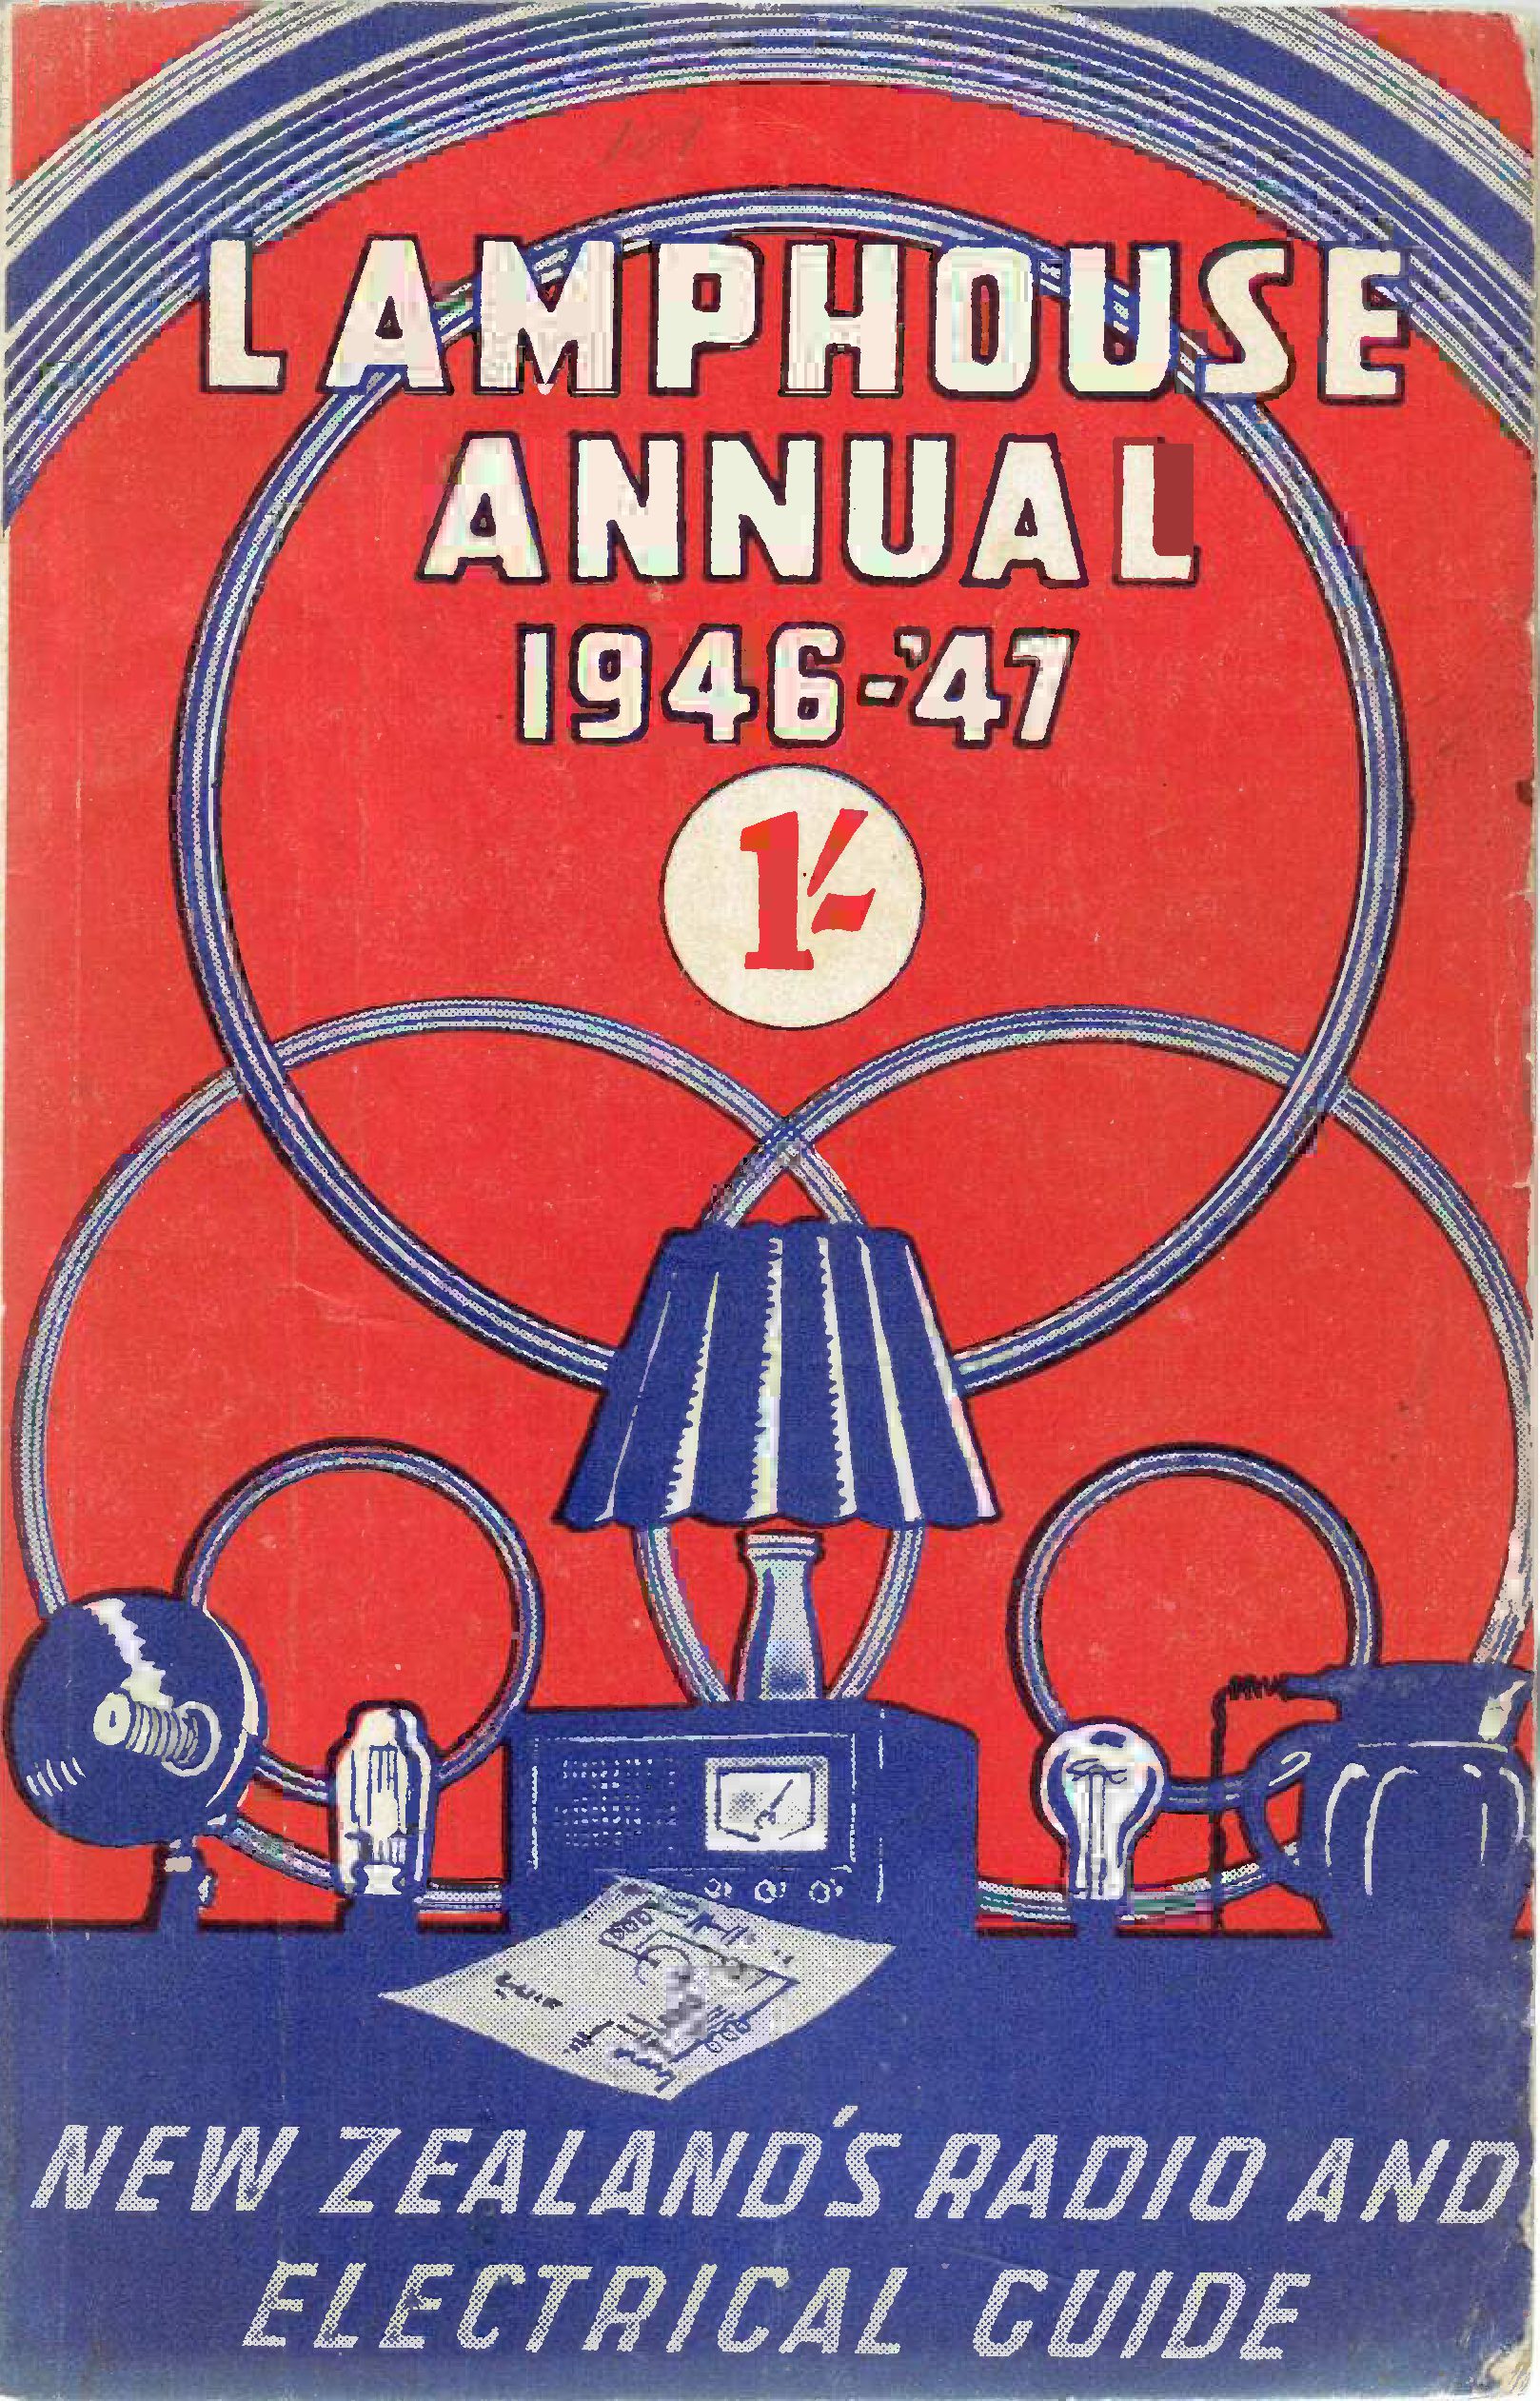 Lamphouse Annual 1946